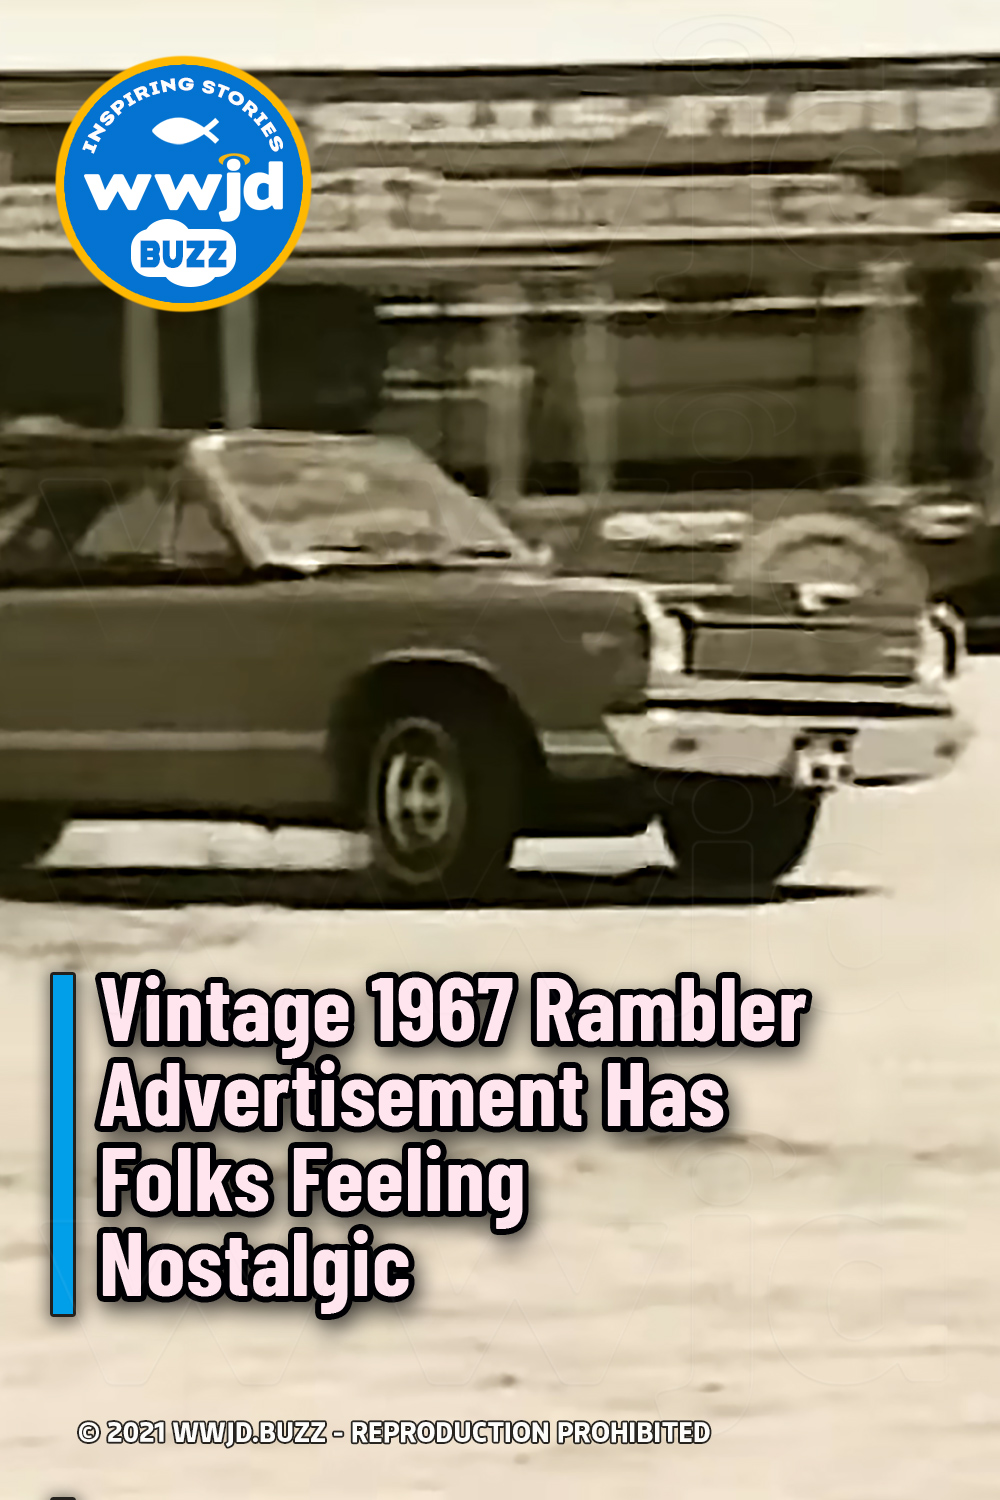 Vintage 1967 Rambler Advertisement Has Folks Feeling Nostalgic